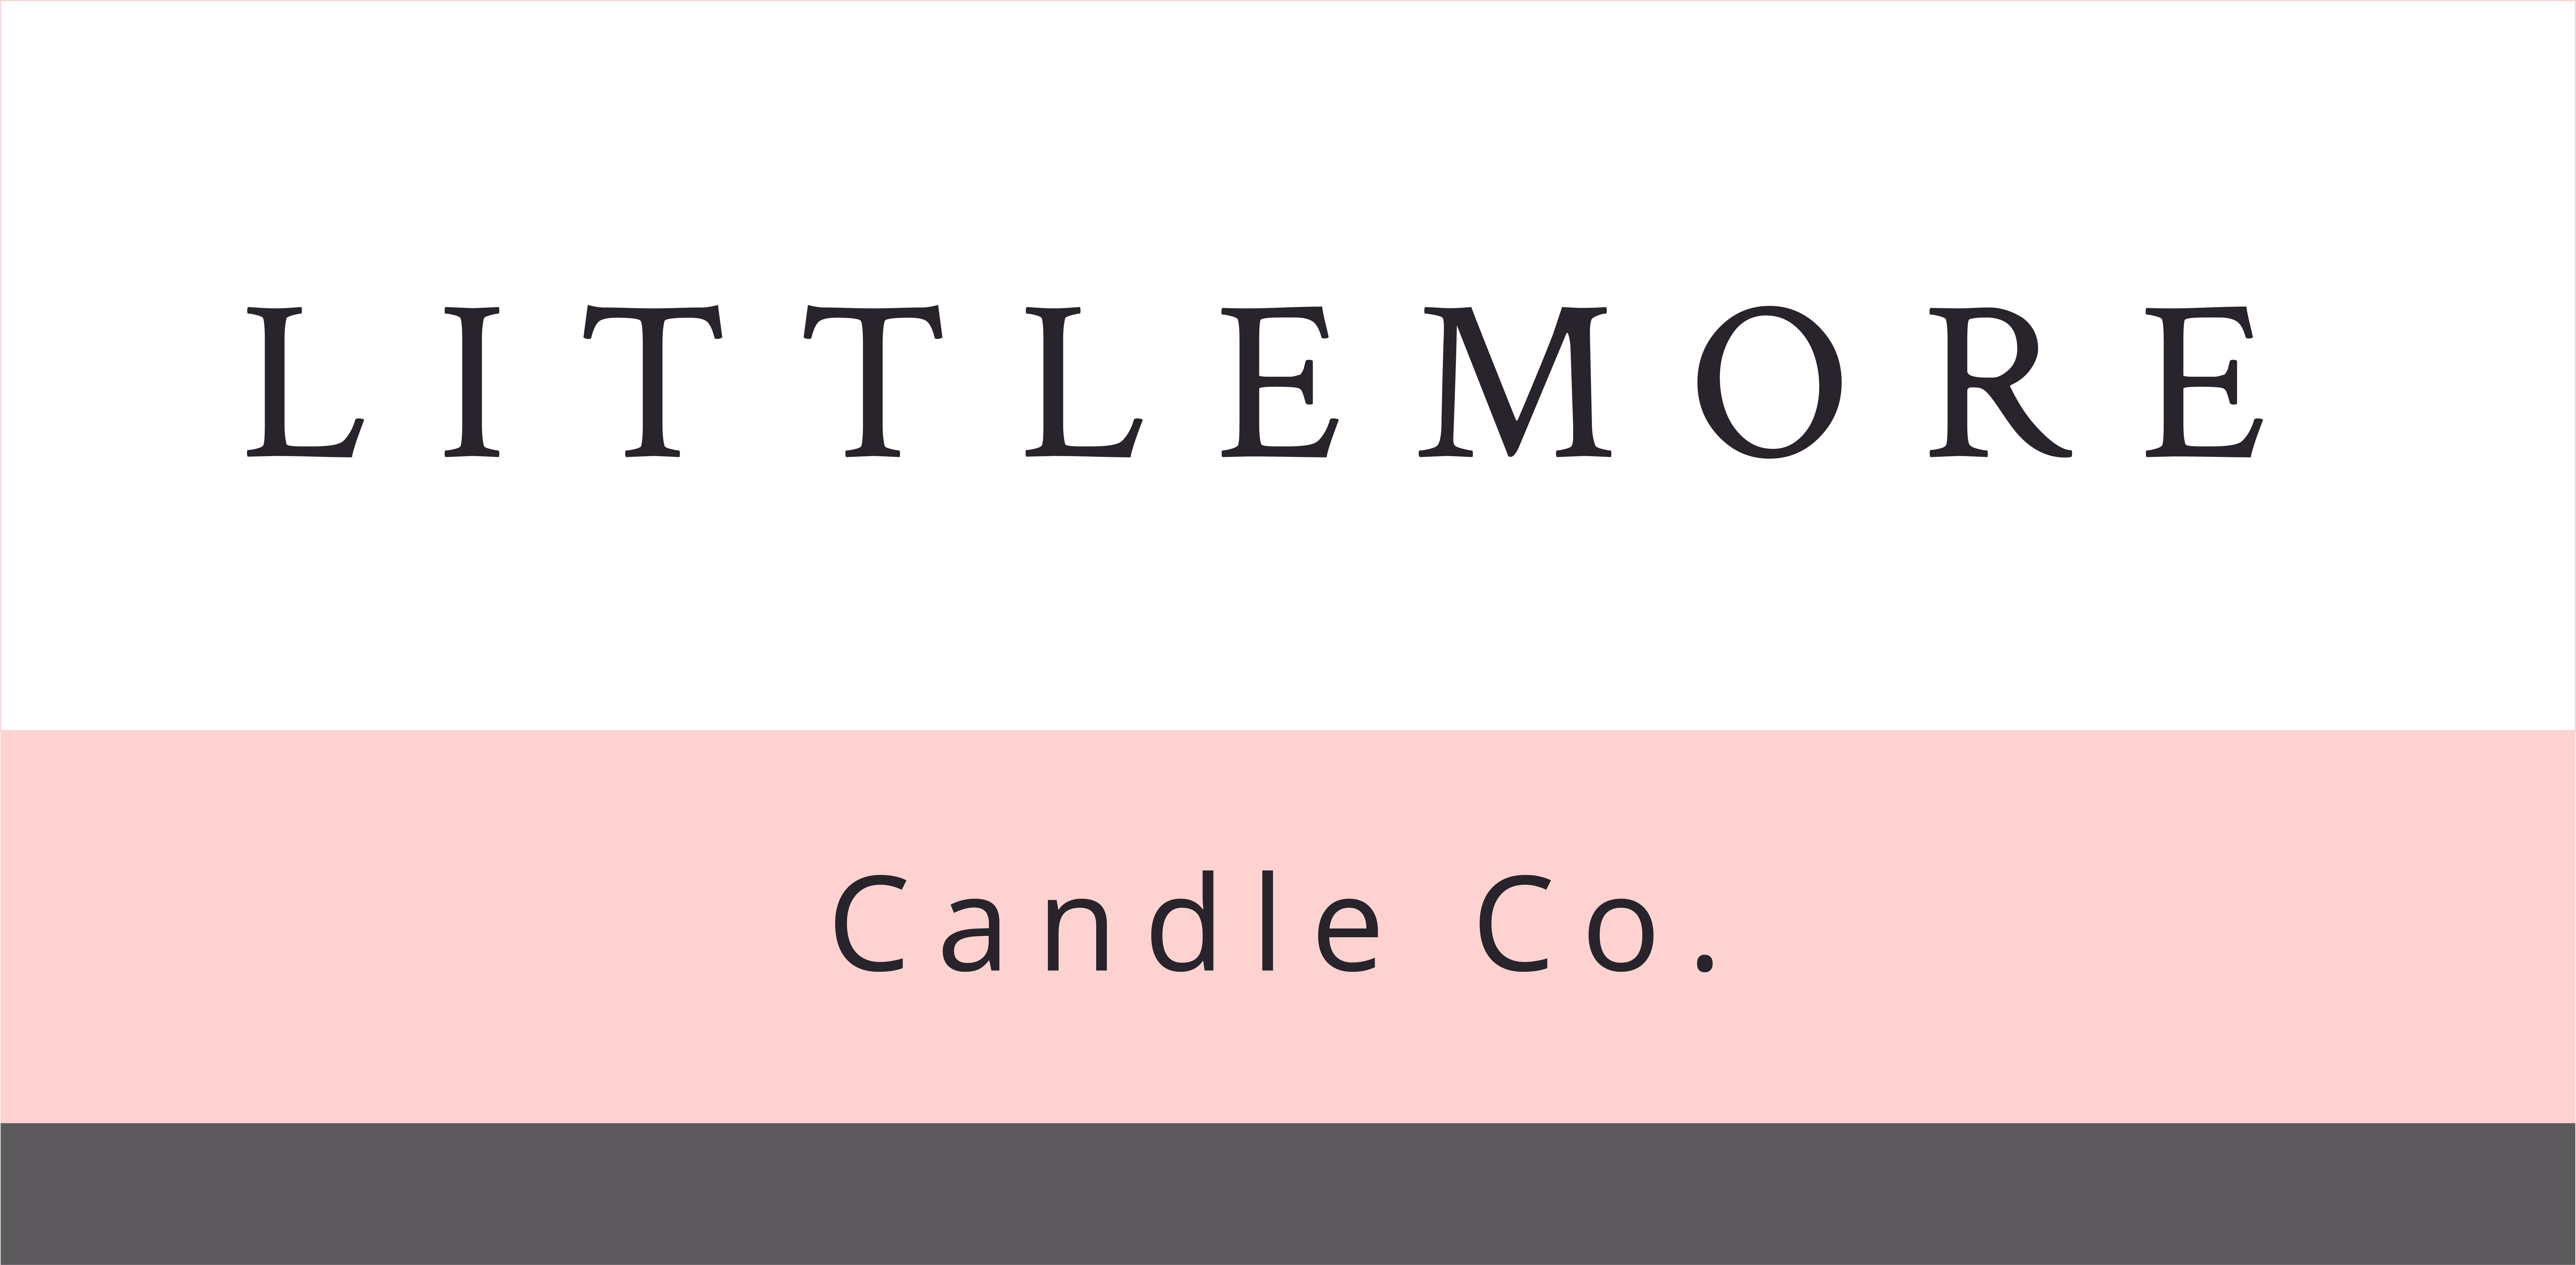 Littlemore Candle Company